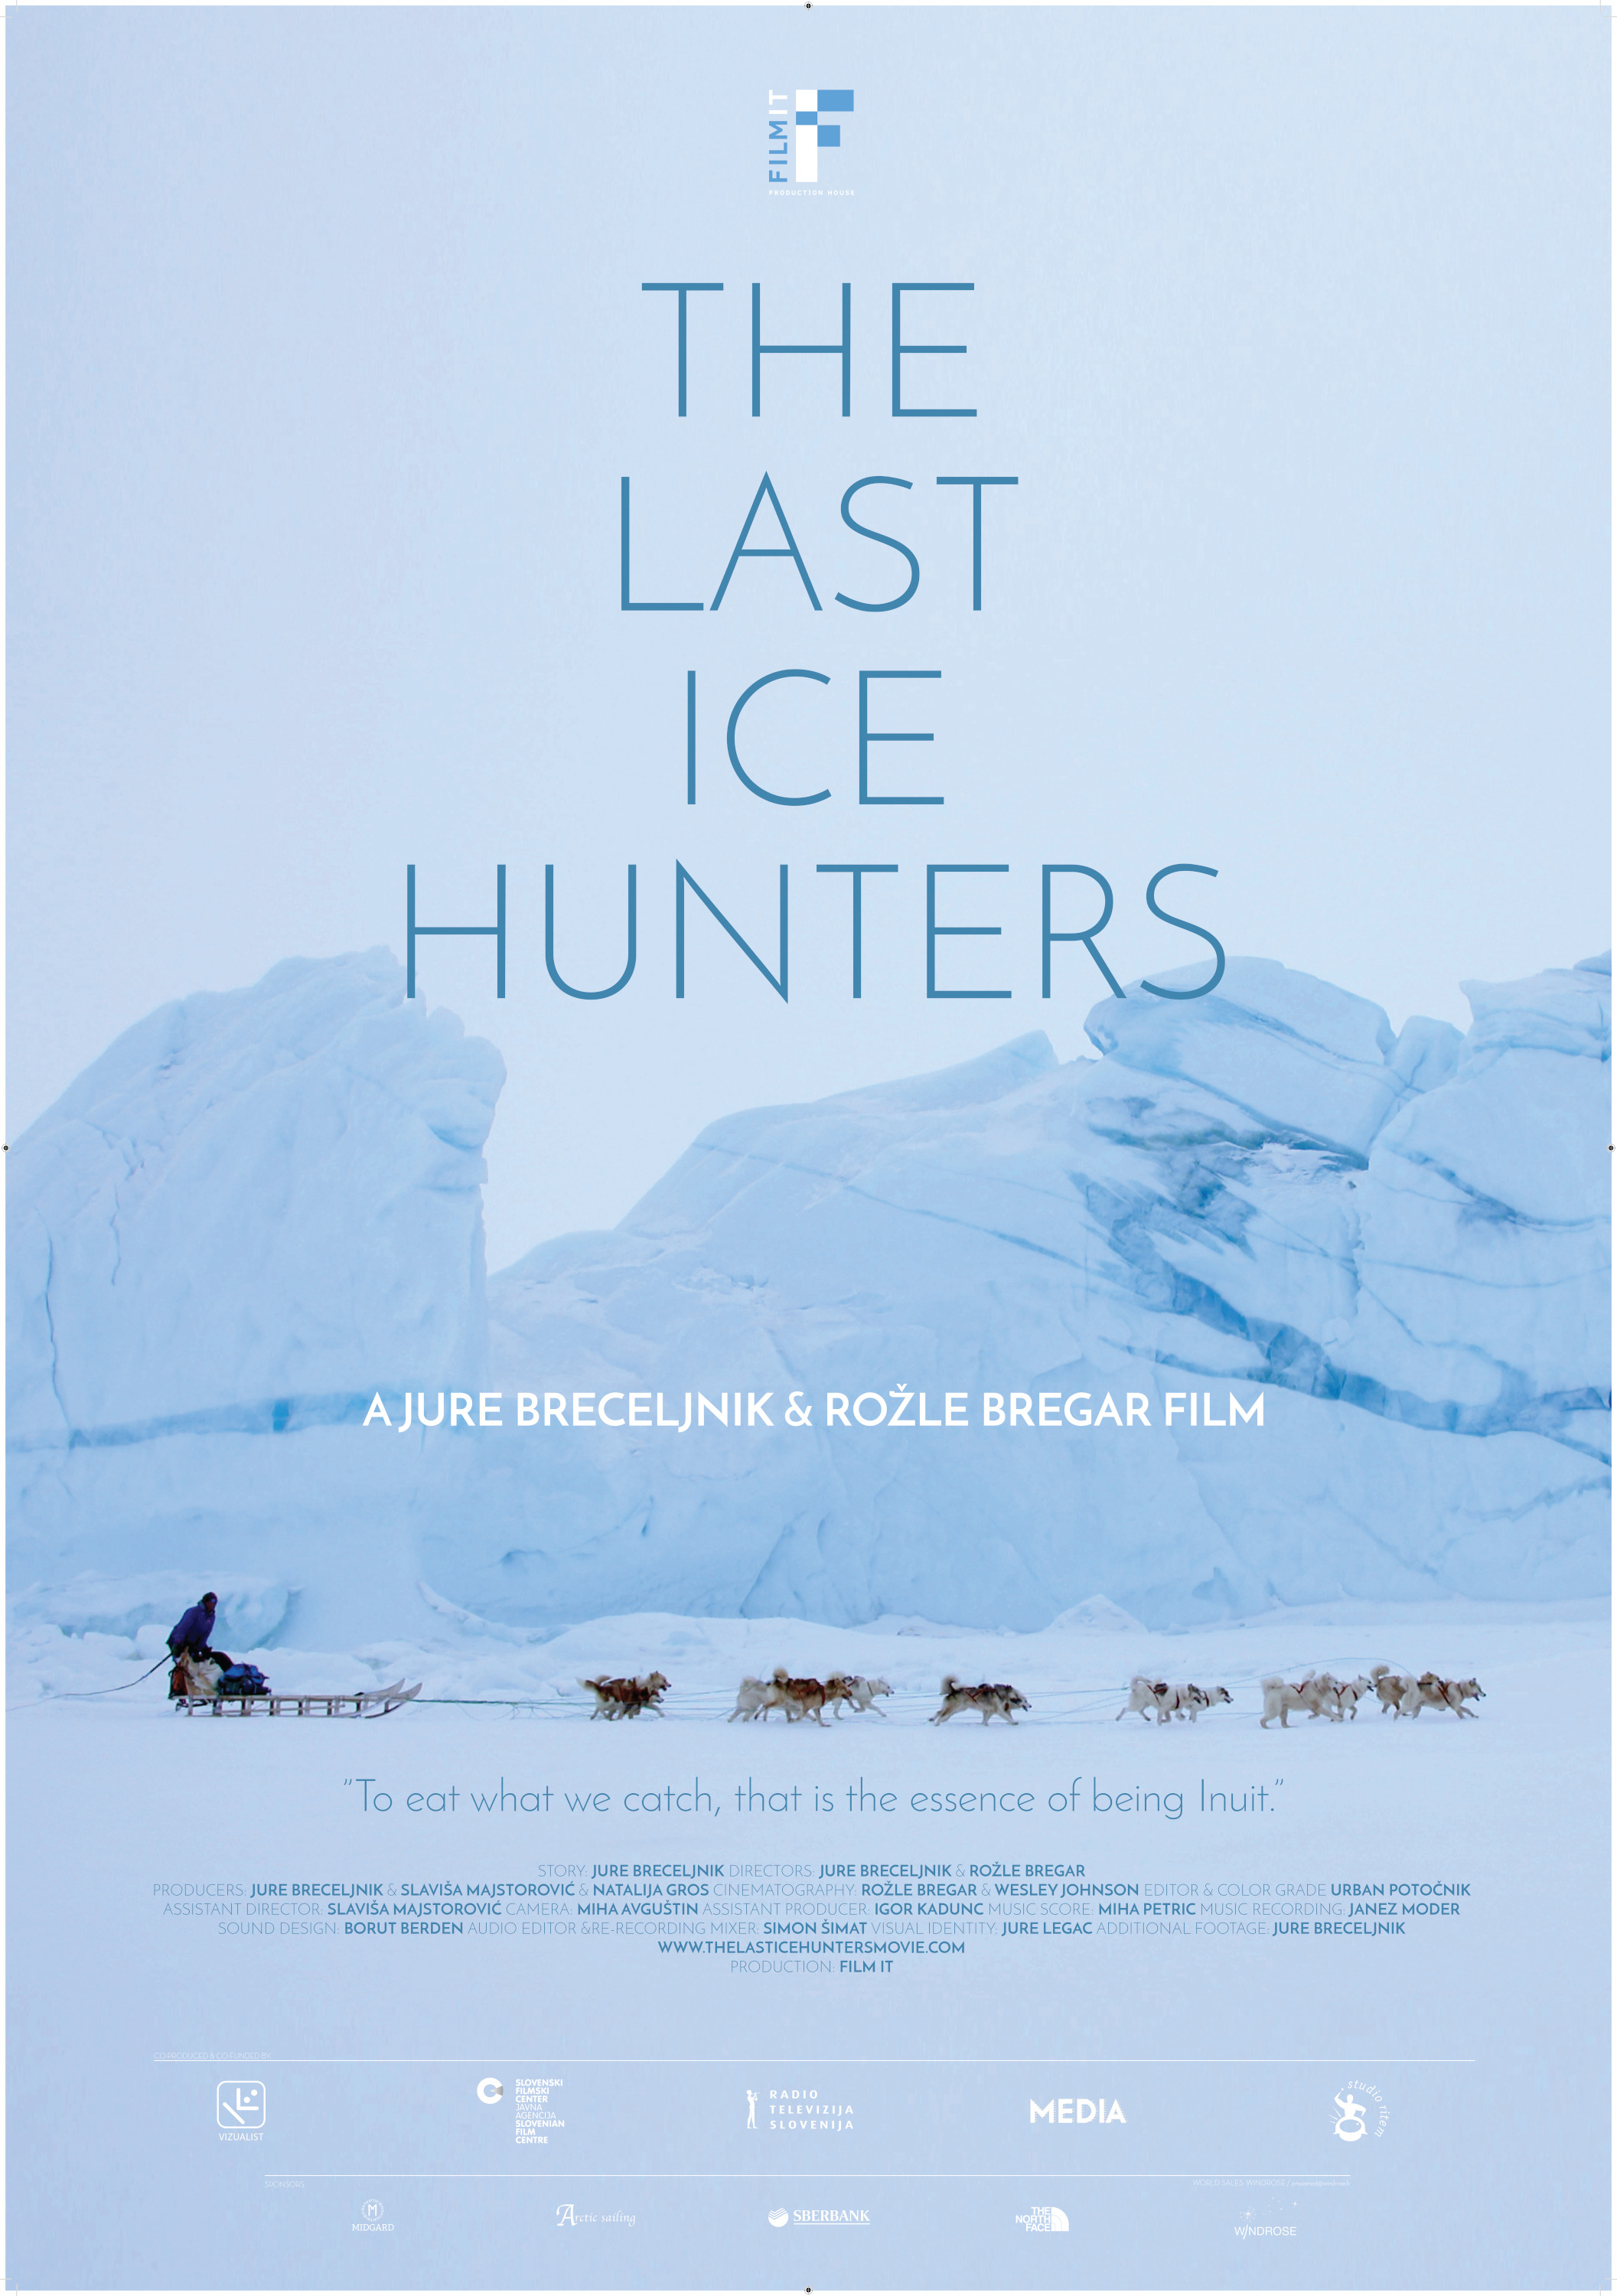 The Last Ice Hunters : Mega Sized Movie Poster Image - IMP Awards